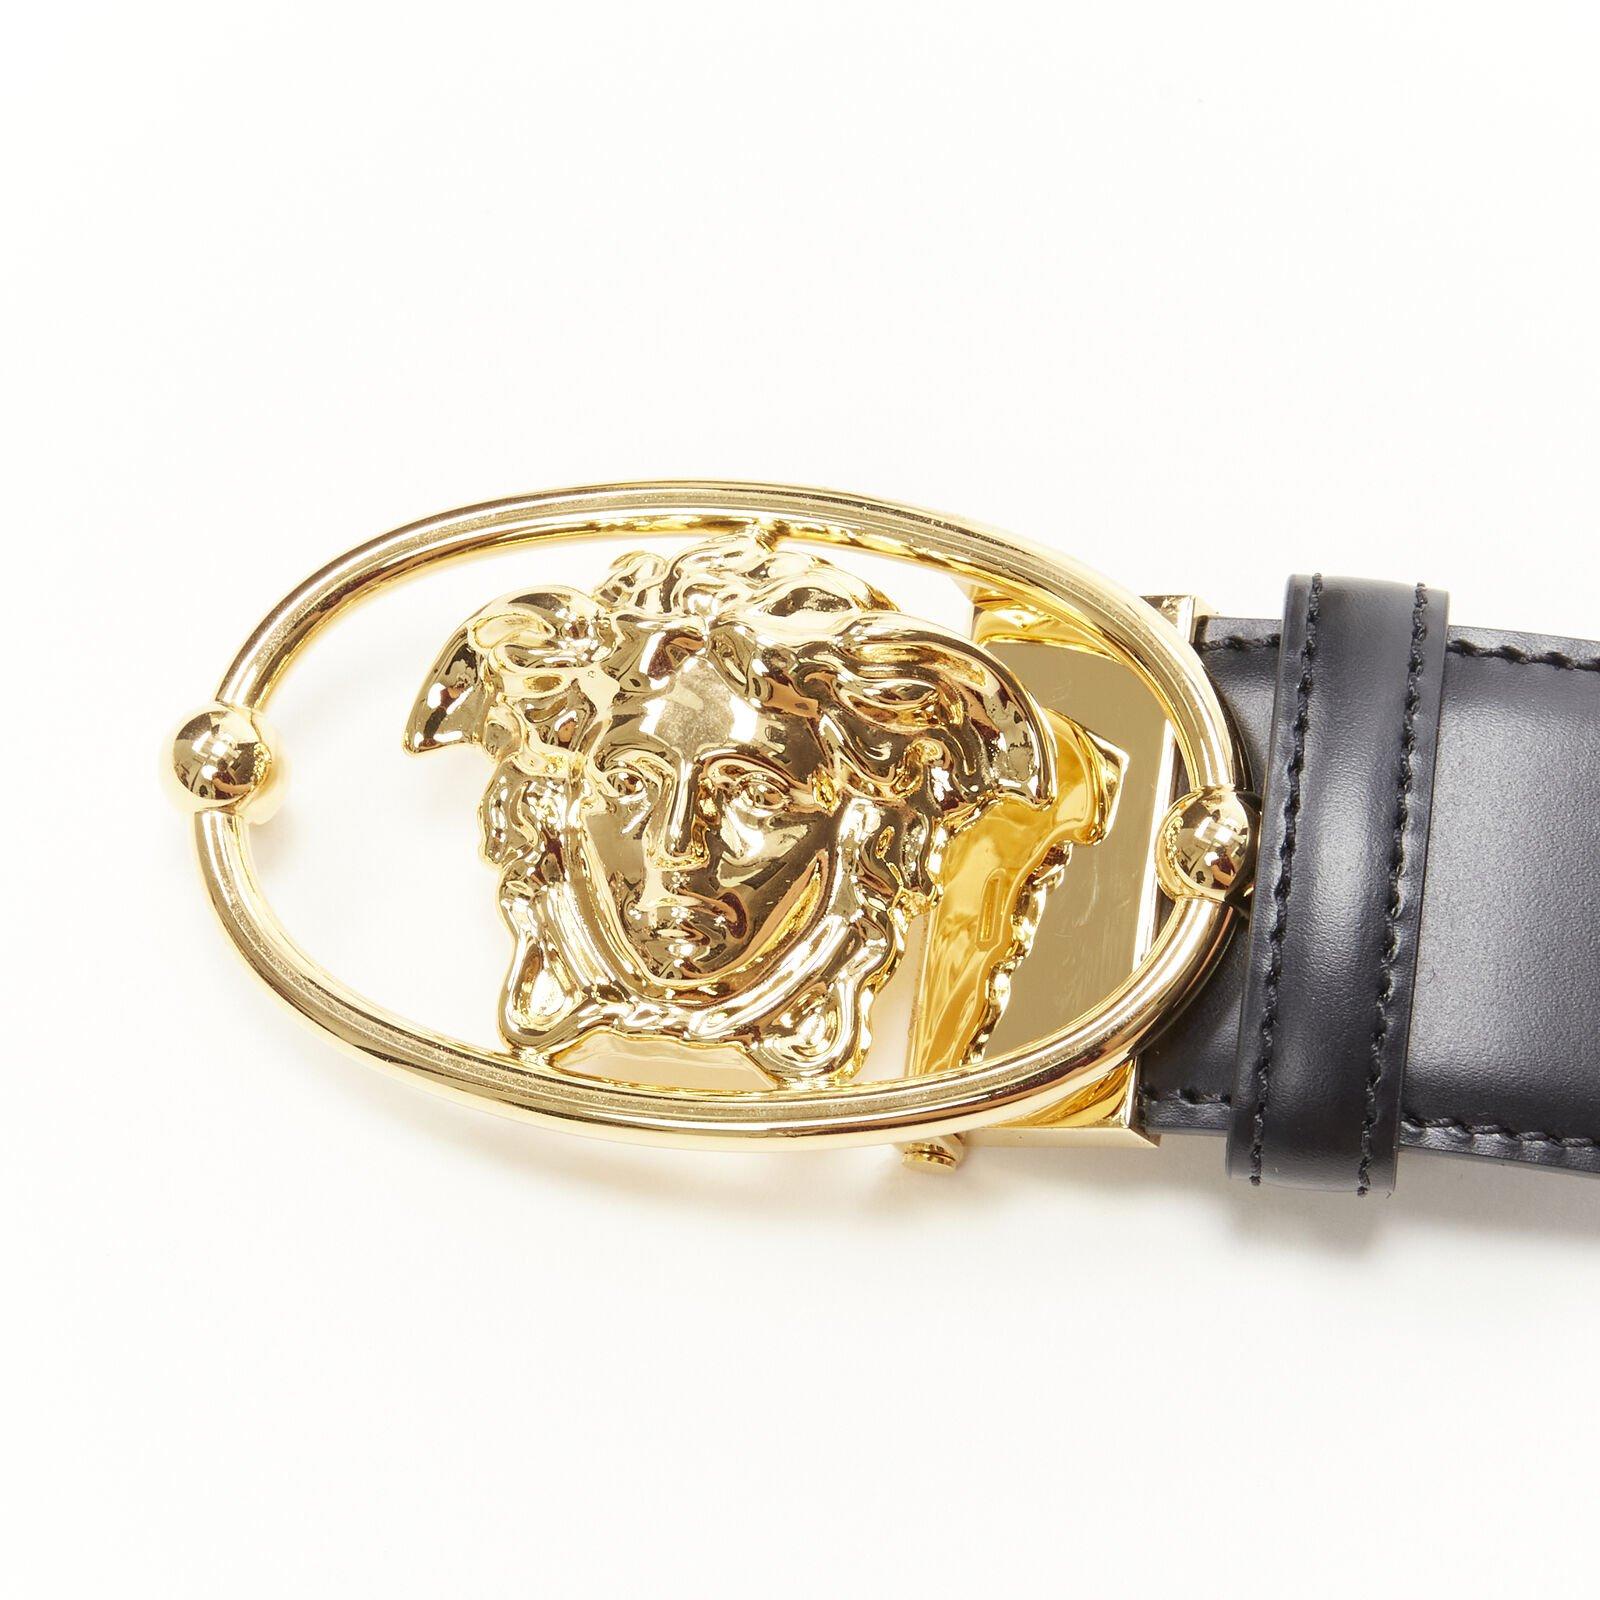 VERSACE La Medusa Insignia gold oval buckle black leather belt 100cm 38-42